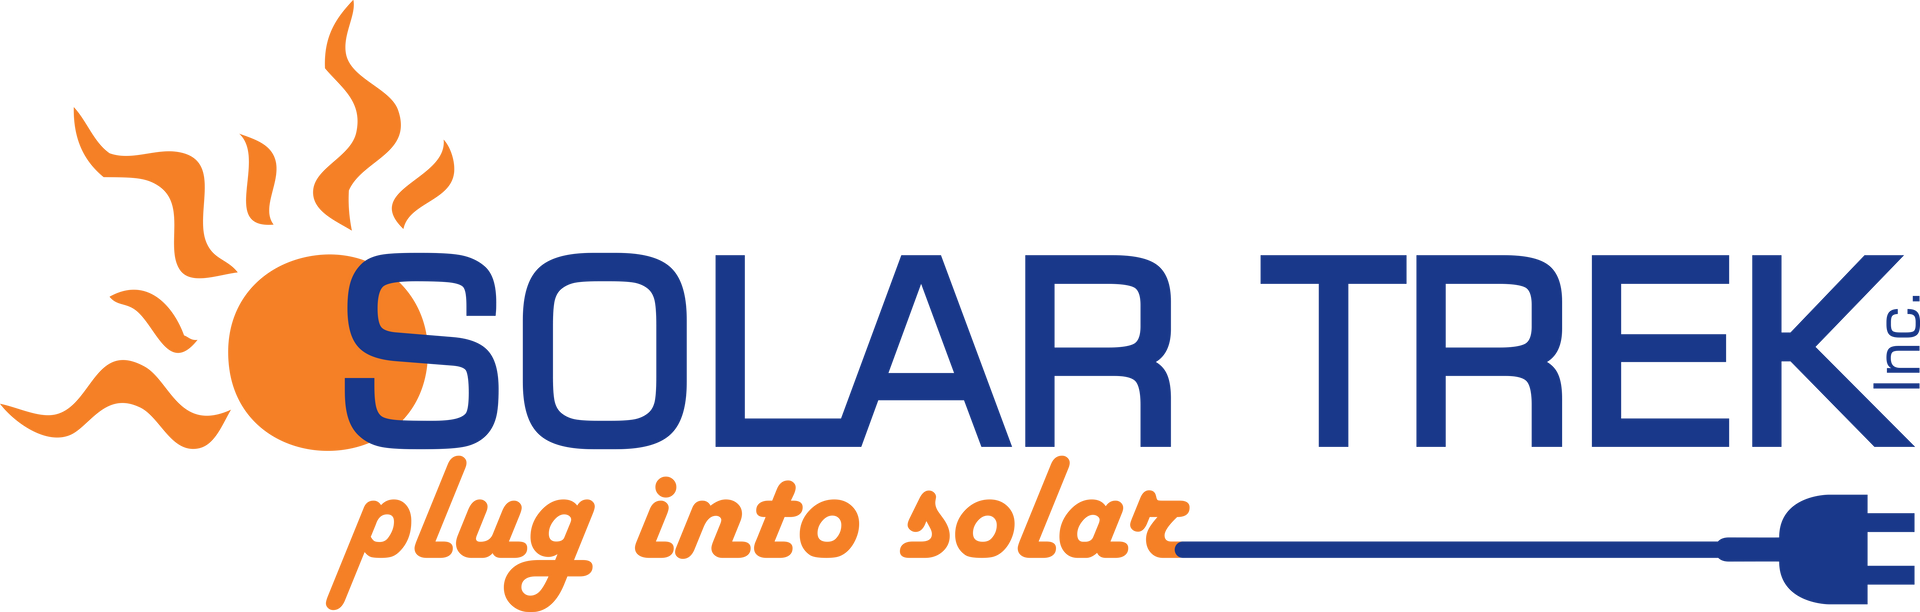 The logo for solar trek plug into solar